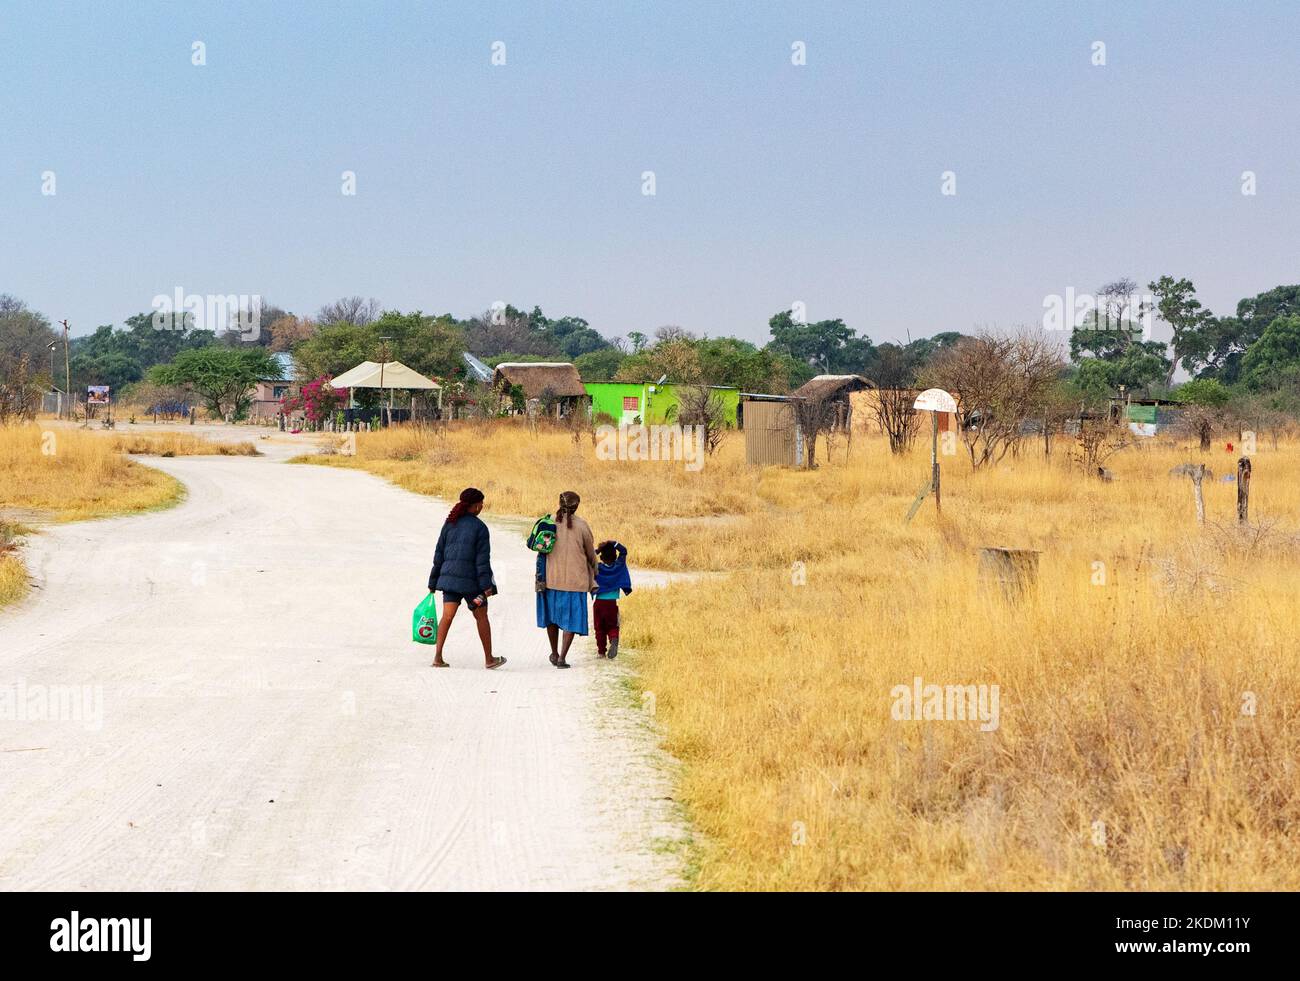 African village scene - people walking along the road into Kwai village, Okavango Delta, Botswana Africa. African lifestyle. Stock Photo